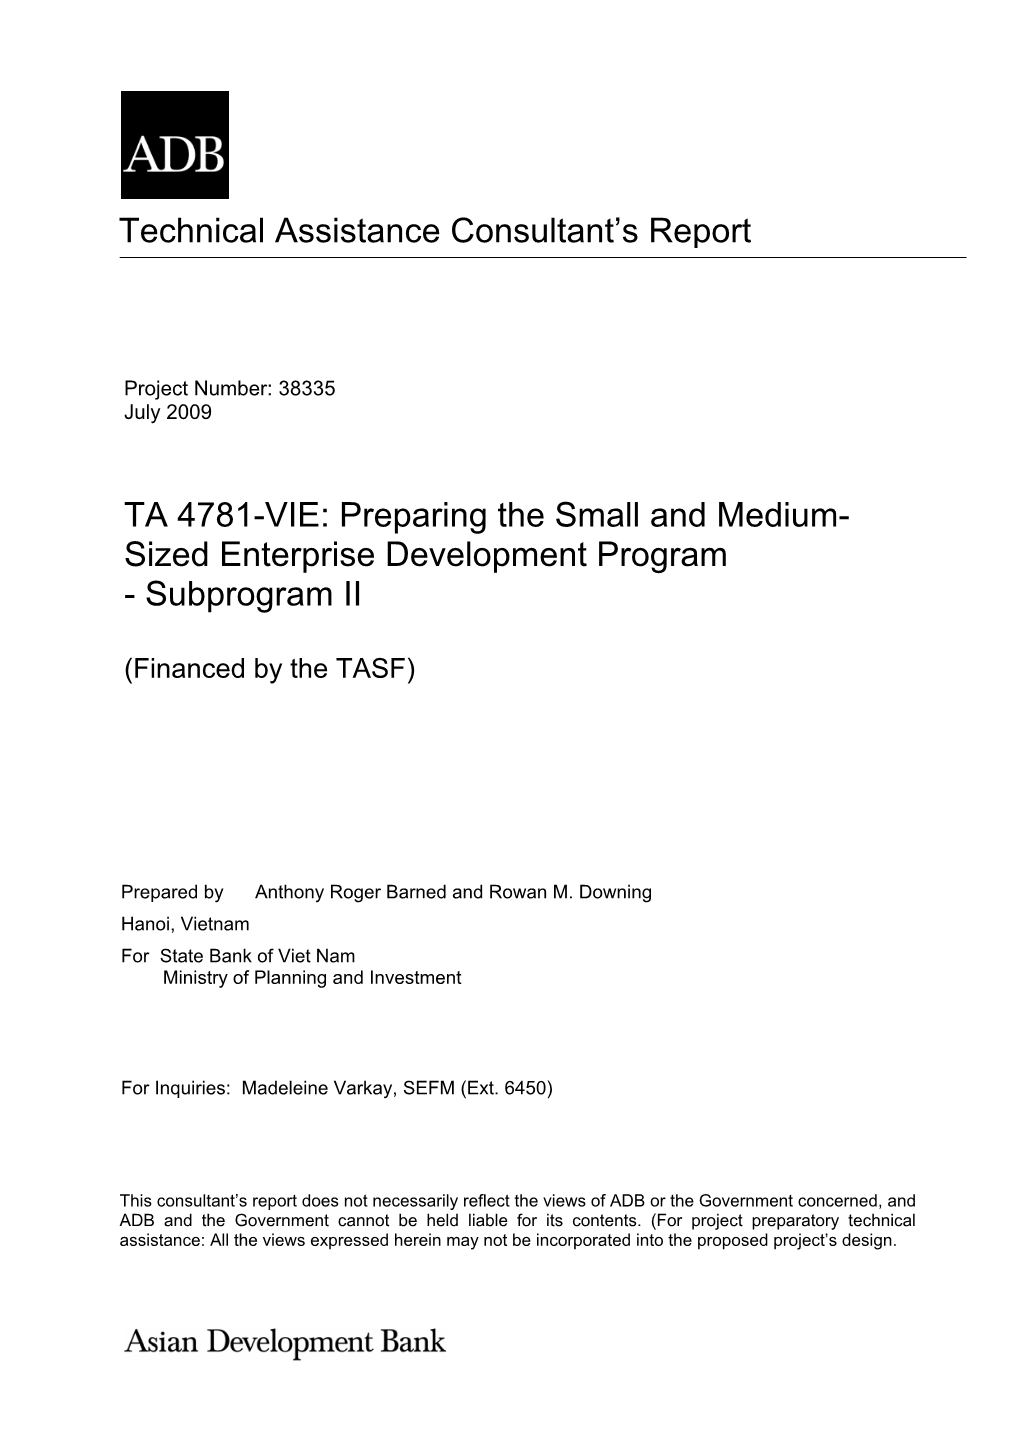 Sized Enterprise Development Program - Subprogram II